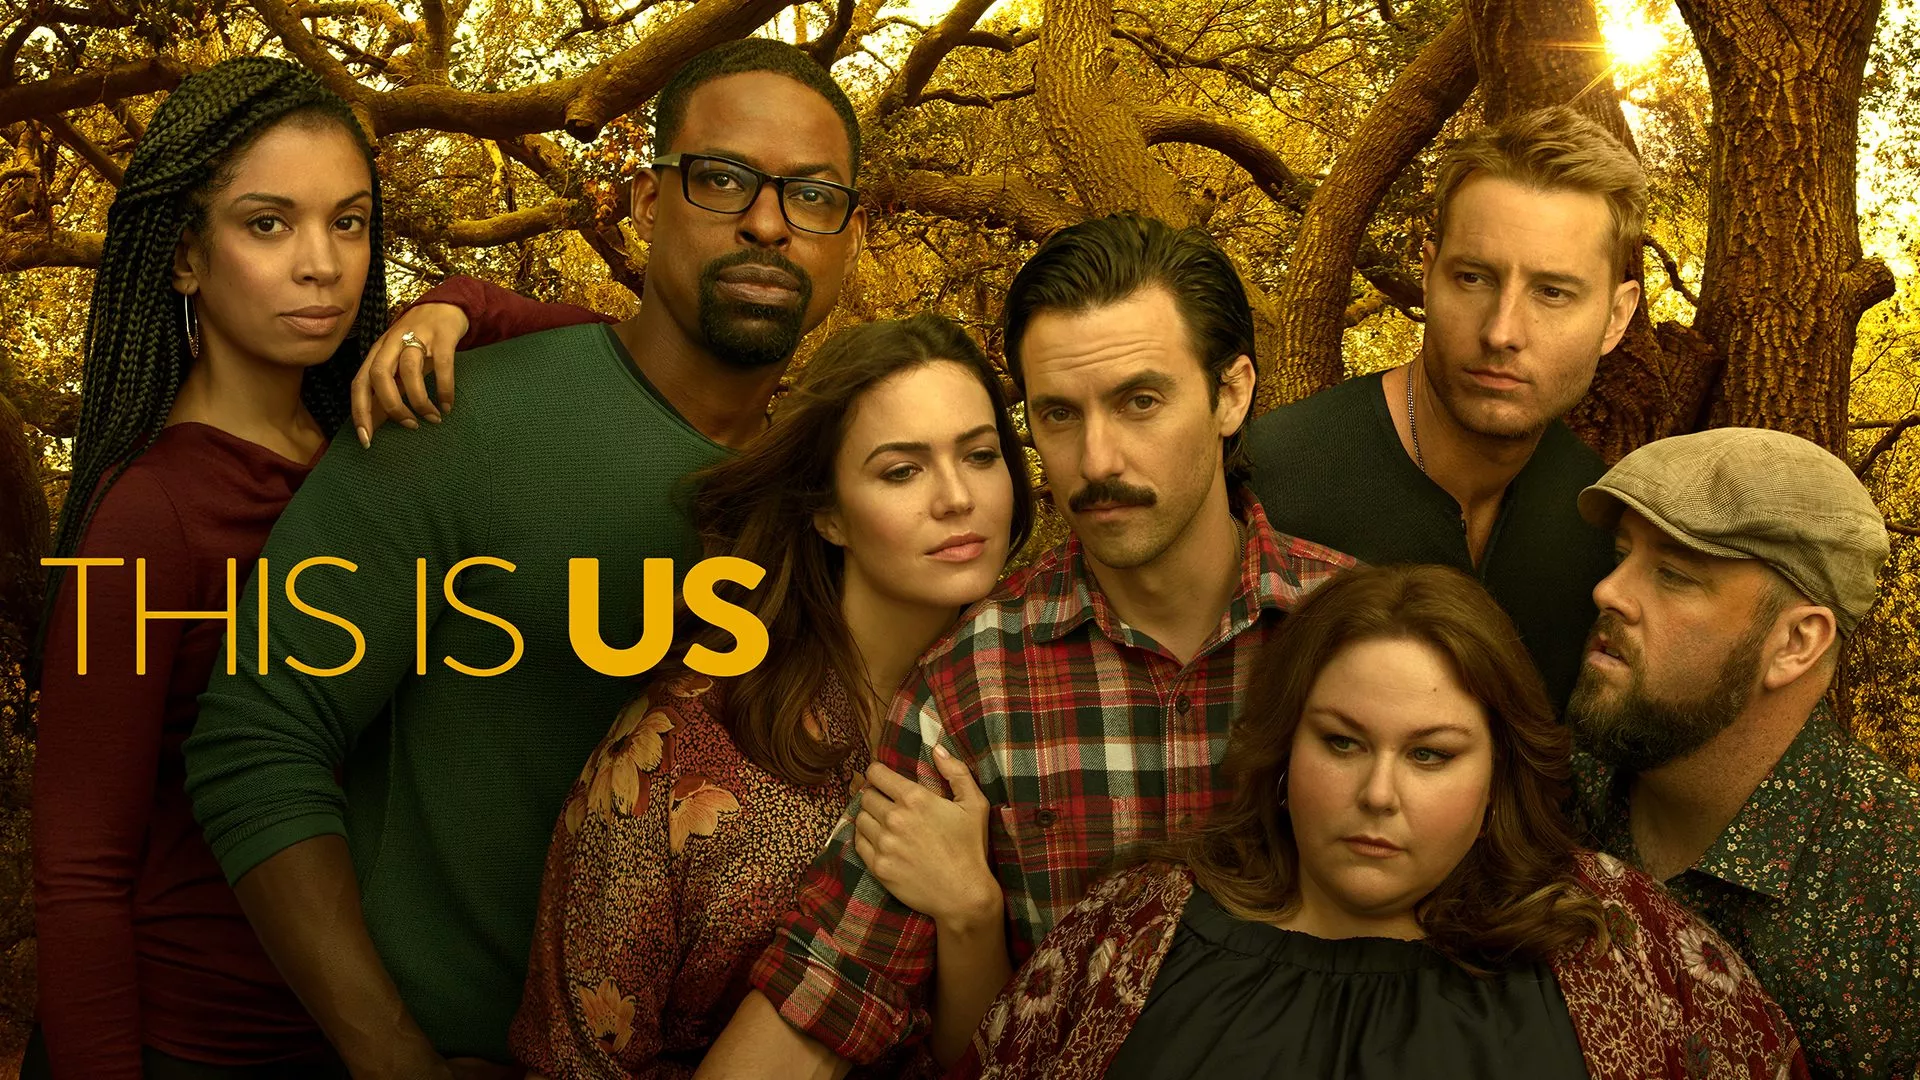 This Is Us | Season 1 Trailer | FOX Home Entertainment